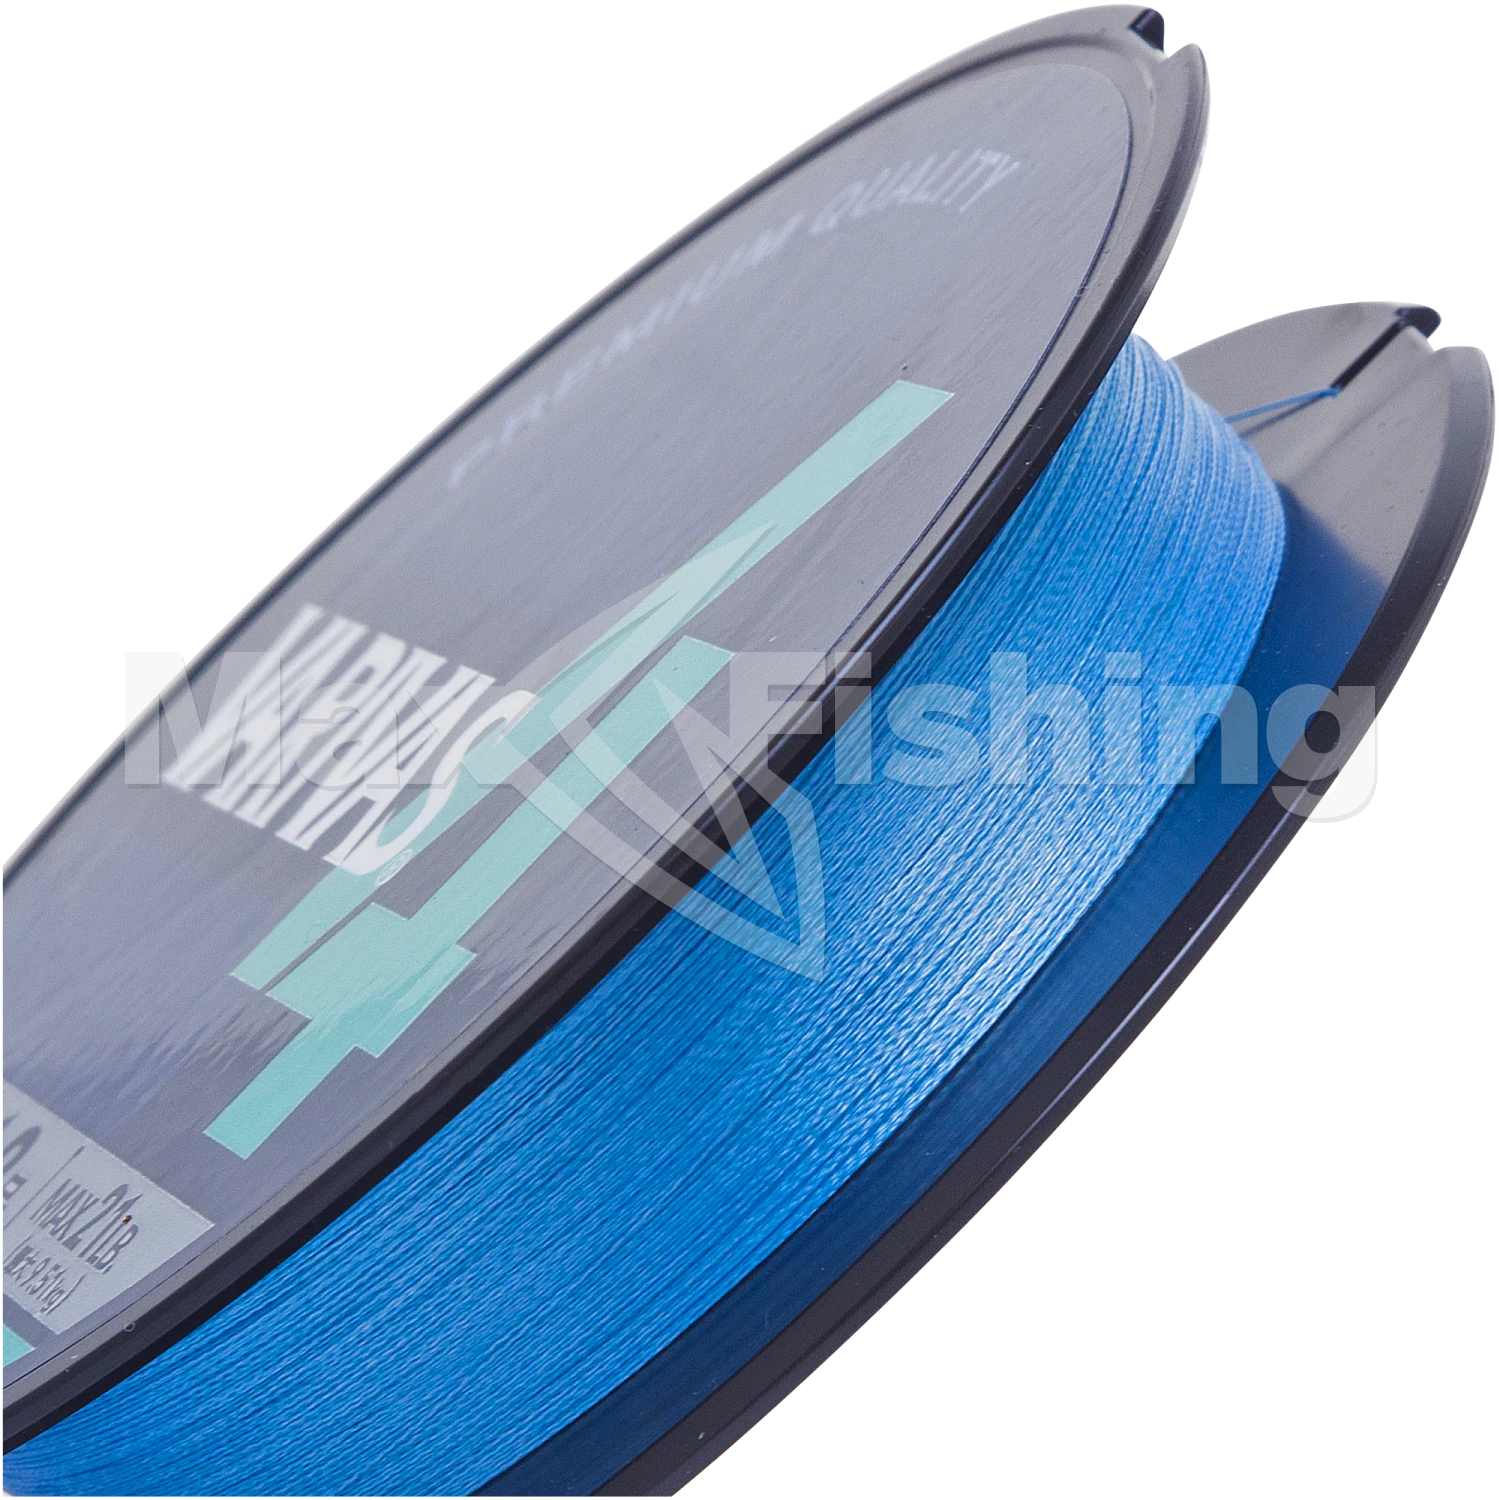 Шнур плетеный Varivas X4 #1,2 0,185мм 200м (water blue)